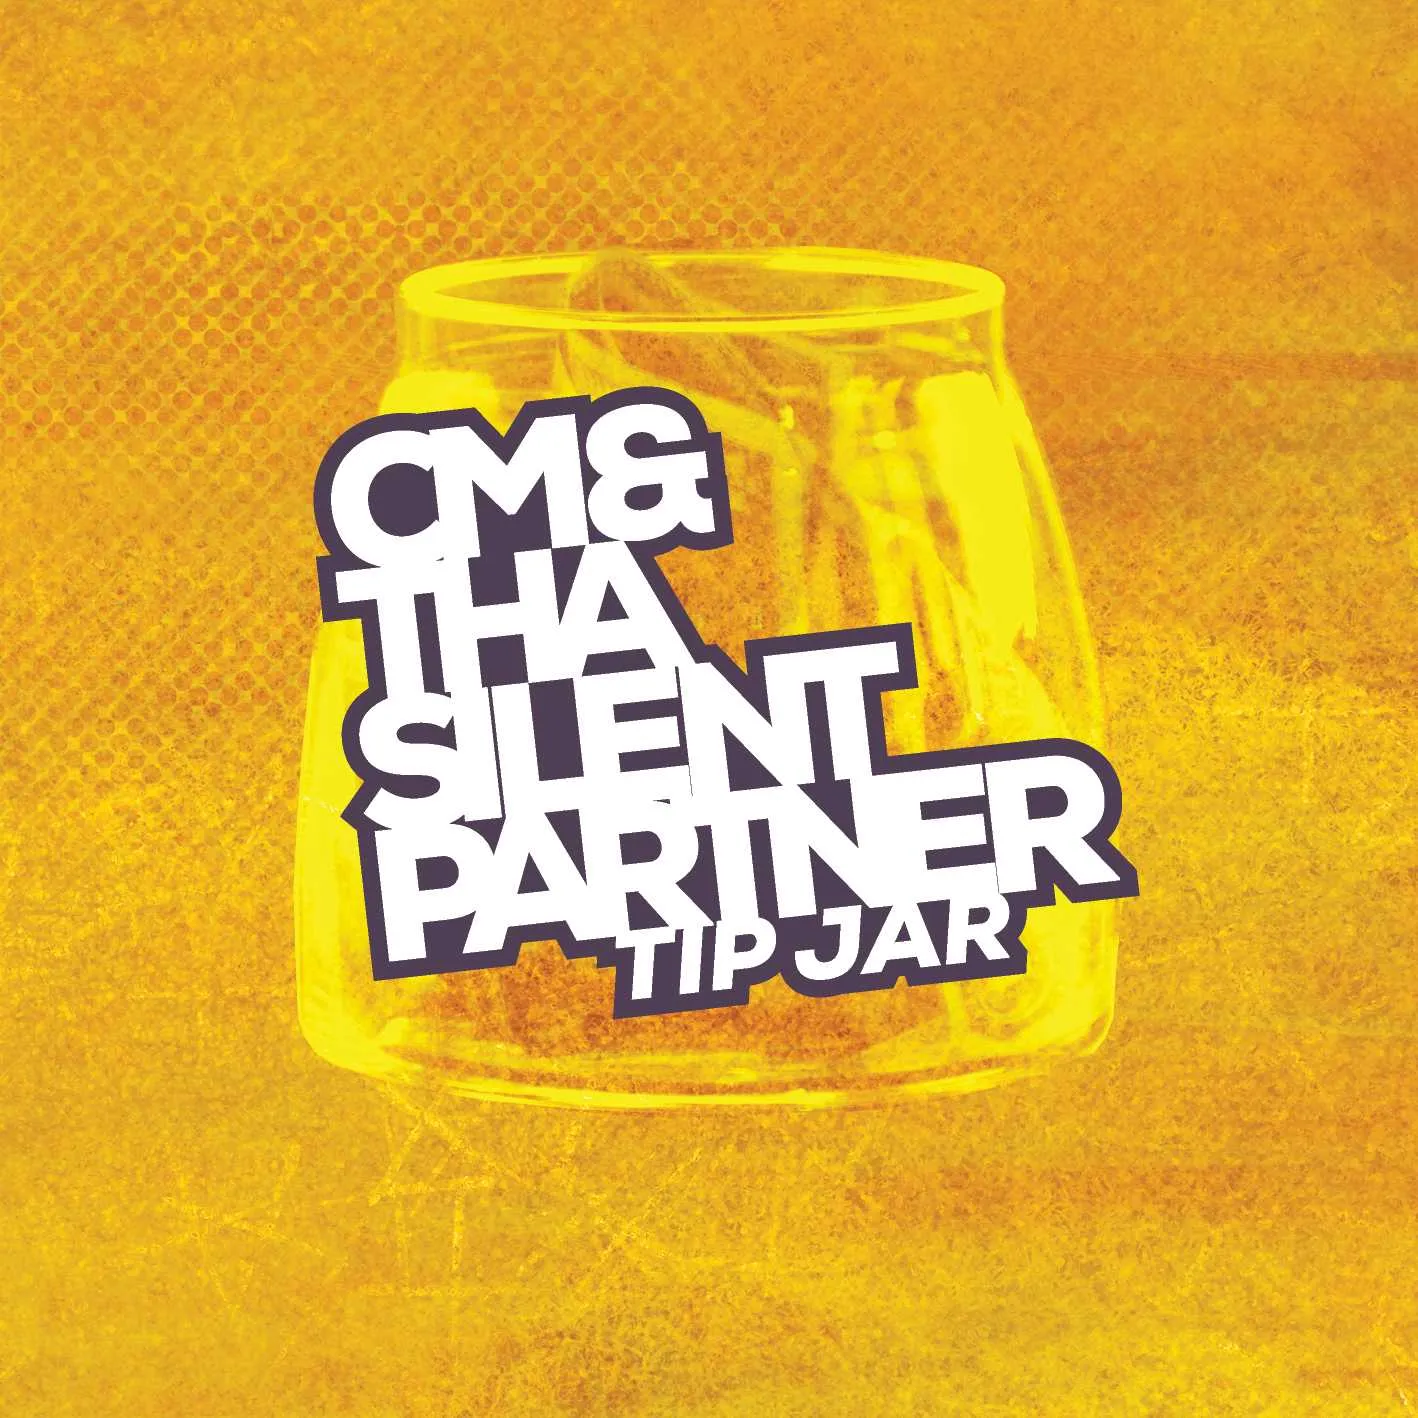 Album cover for “Tip Jar” by CM &amp; Tha Silent Partner